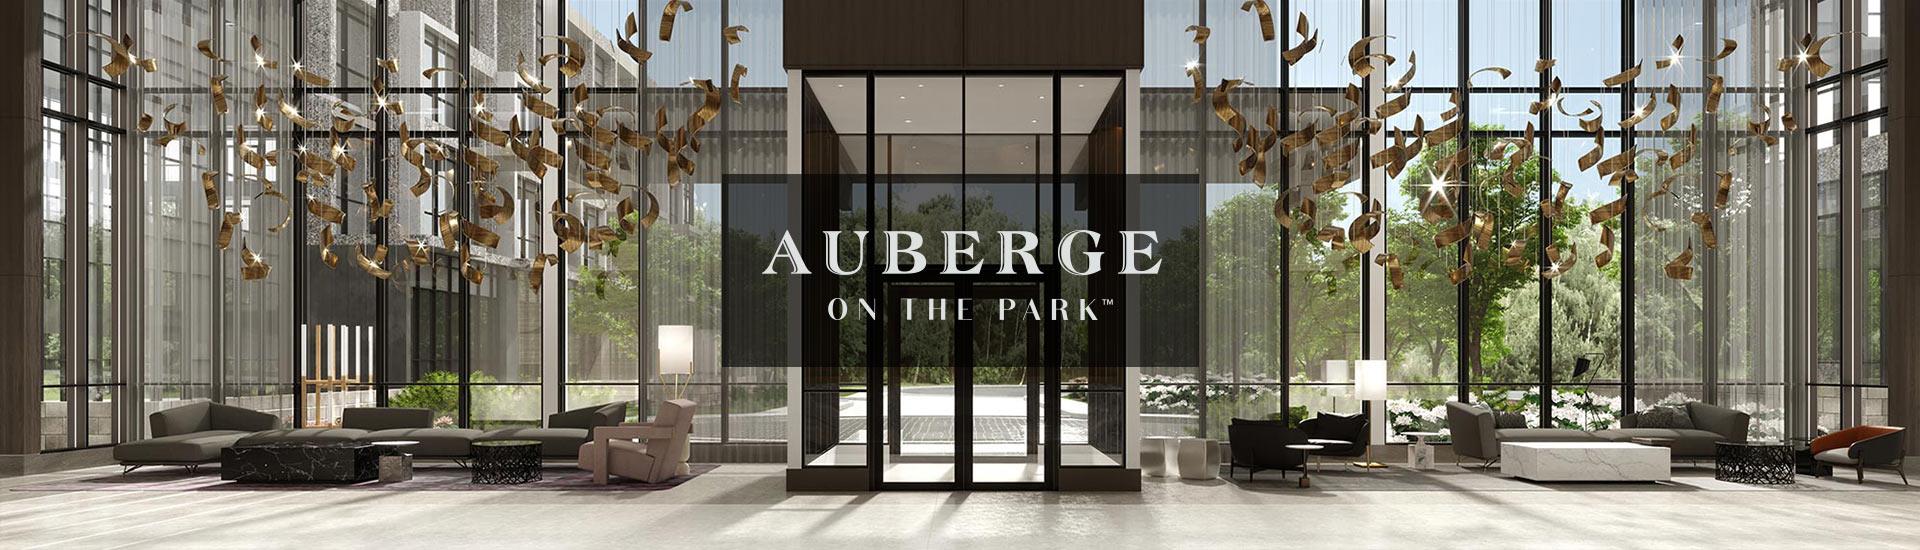 Auberge On The Park - Interior Lobby Render